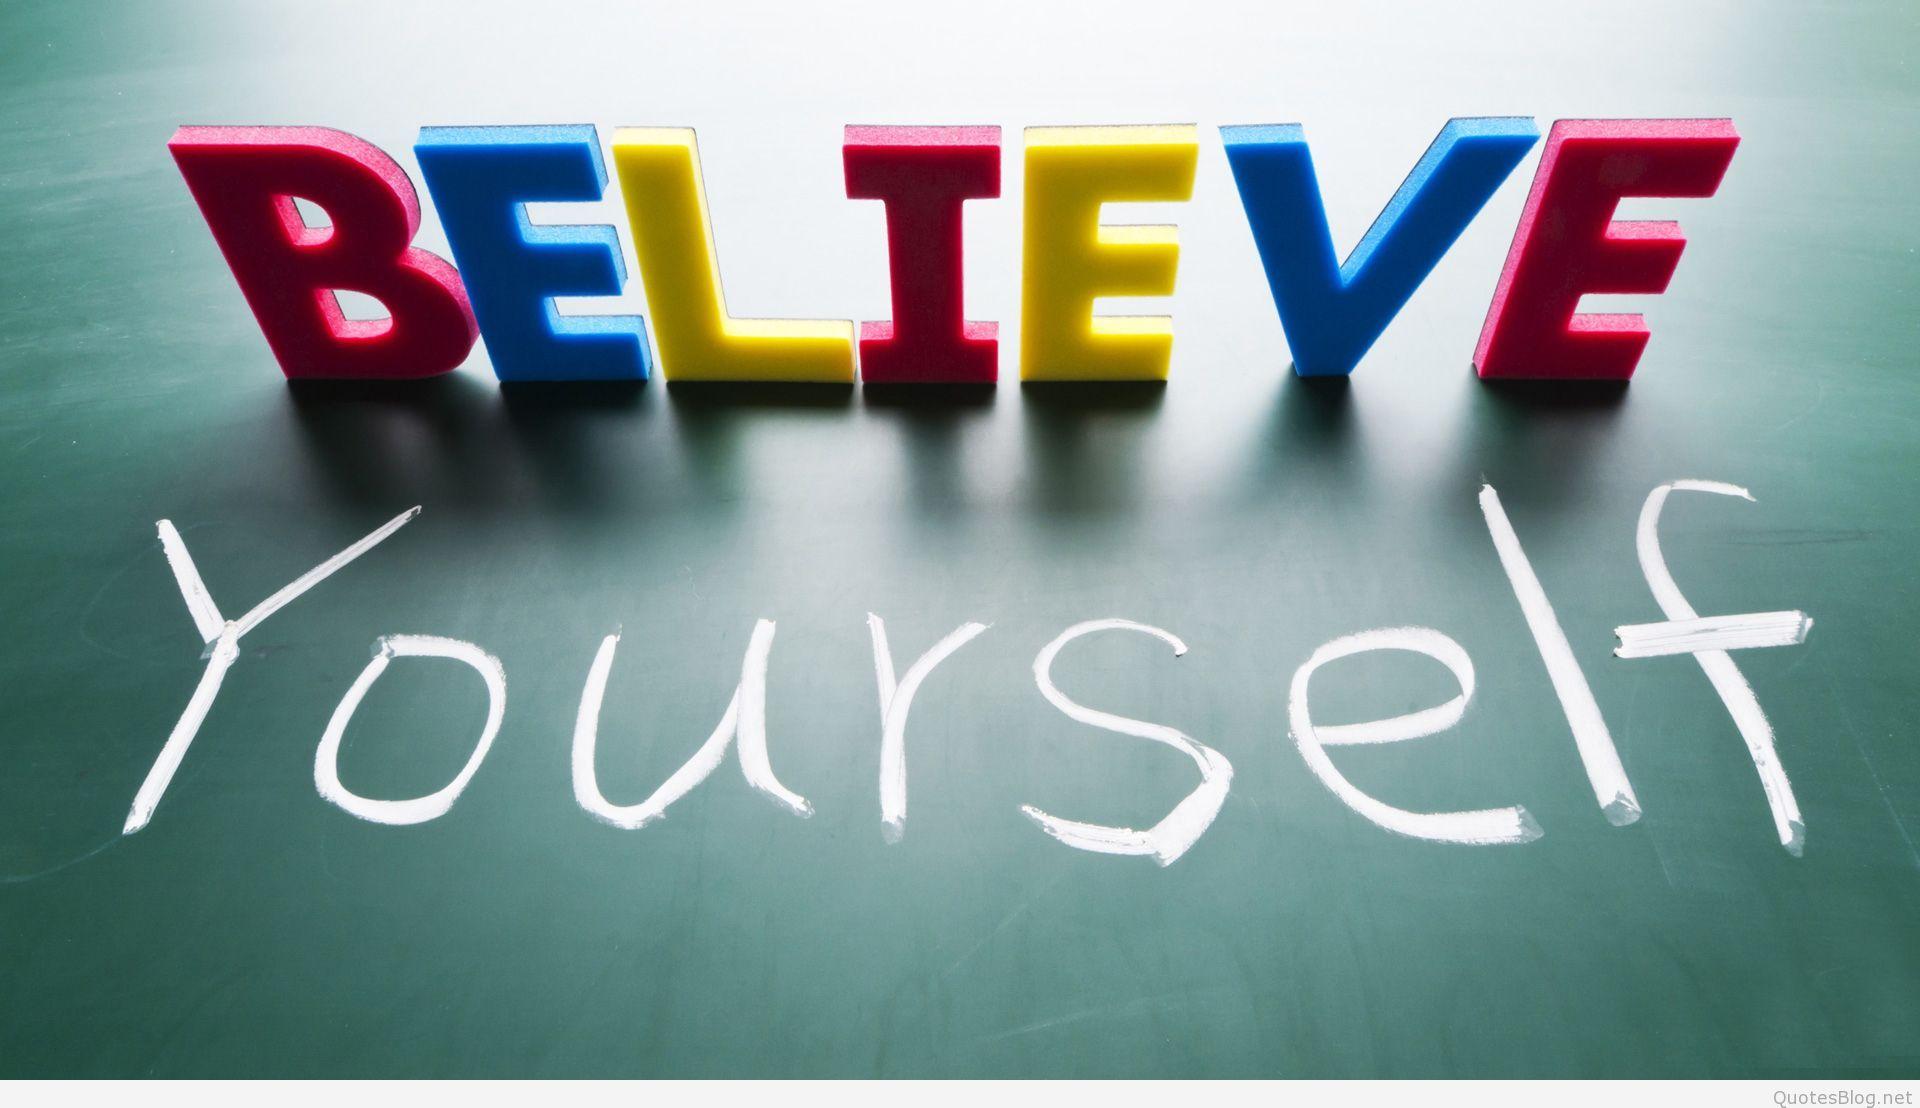 Download Believe yourself motivational wallpaper for laptop screen